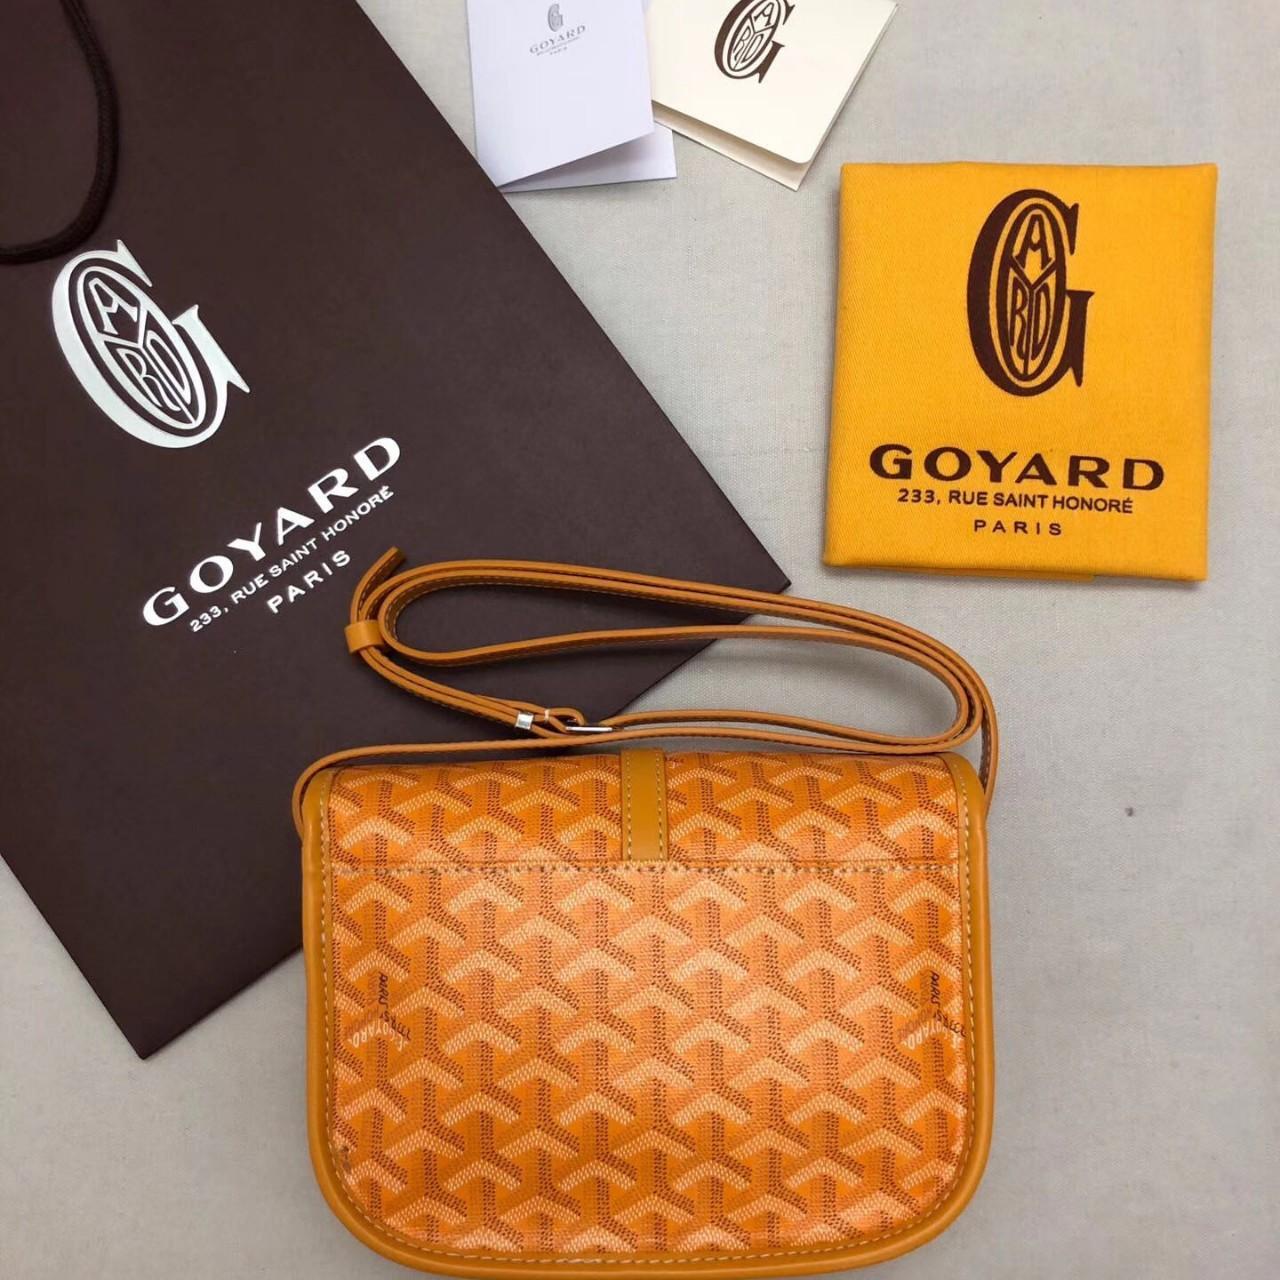 Goyard crossbody bag. The bag is brand new and in... - Depop